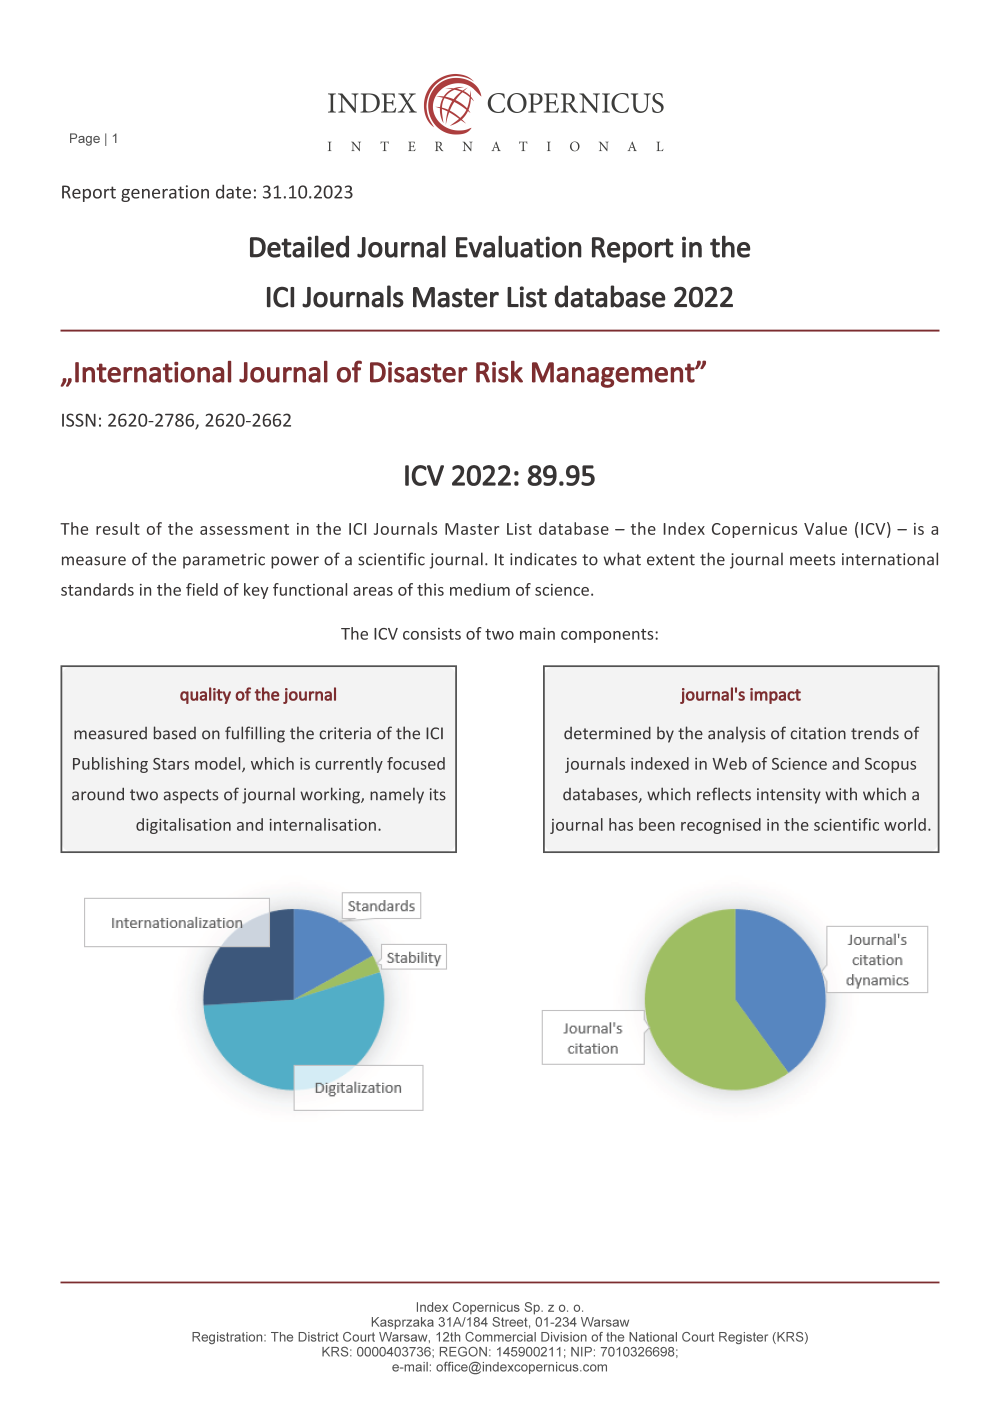 Međunarodni časopis (International Journal of Disaster Risk Management) indeksiran u bazi podataka ,,ICI Journals Master List" za 2022. godinu!